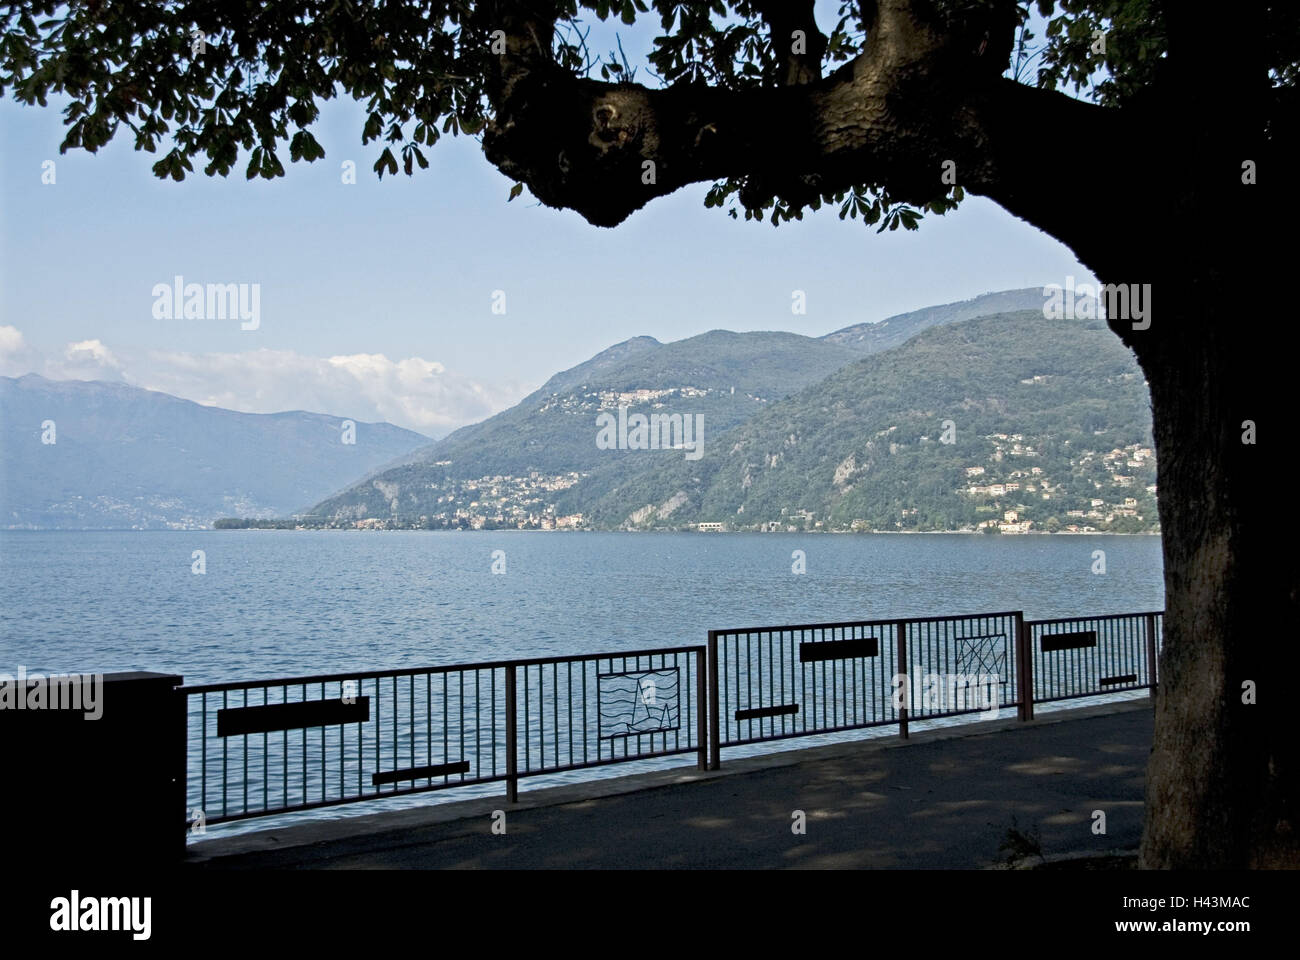 Italy, Northern Italy, Lago Maggiore, lake, Luino, promenade, mountains, Stock Photo